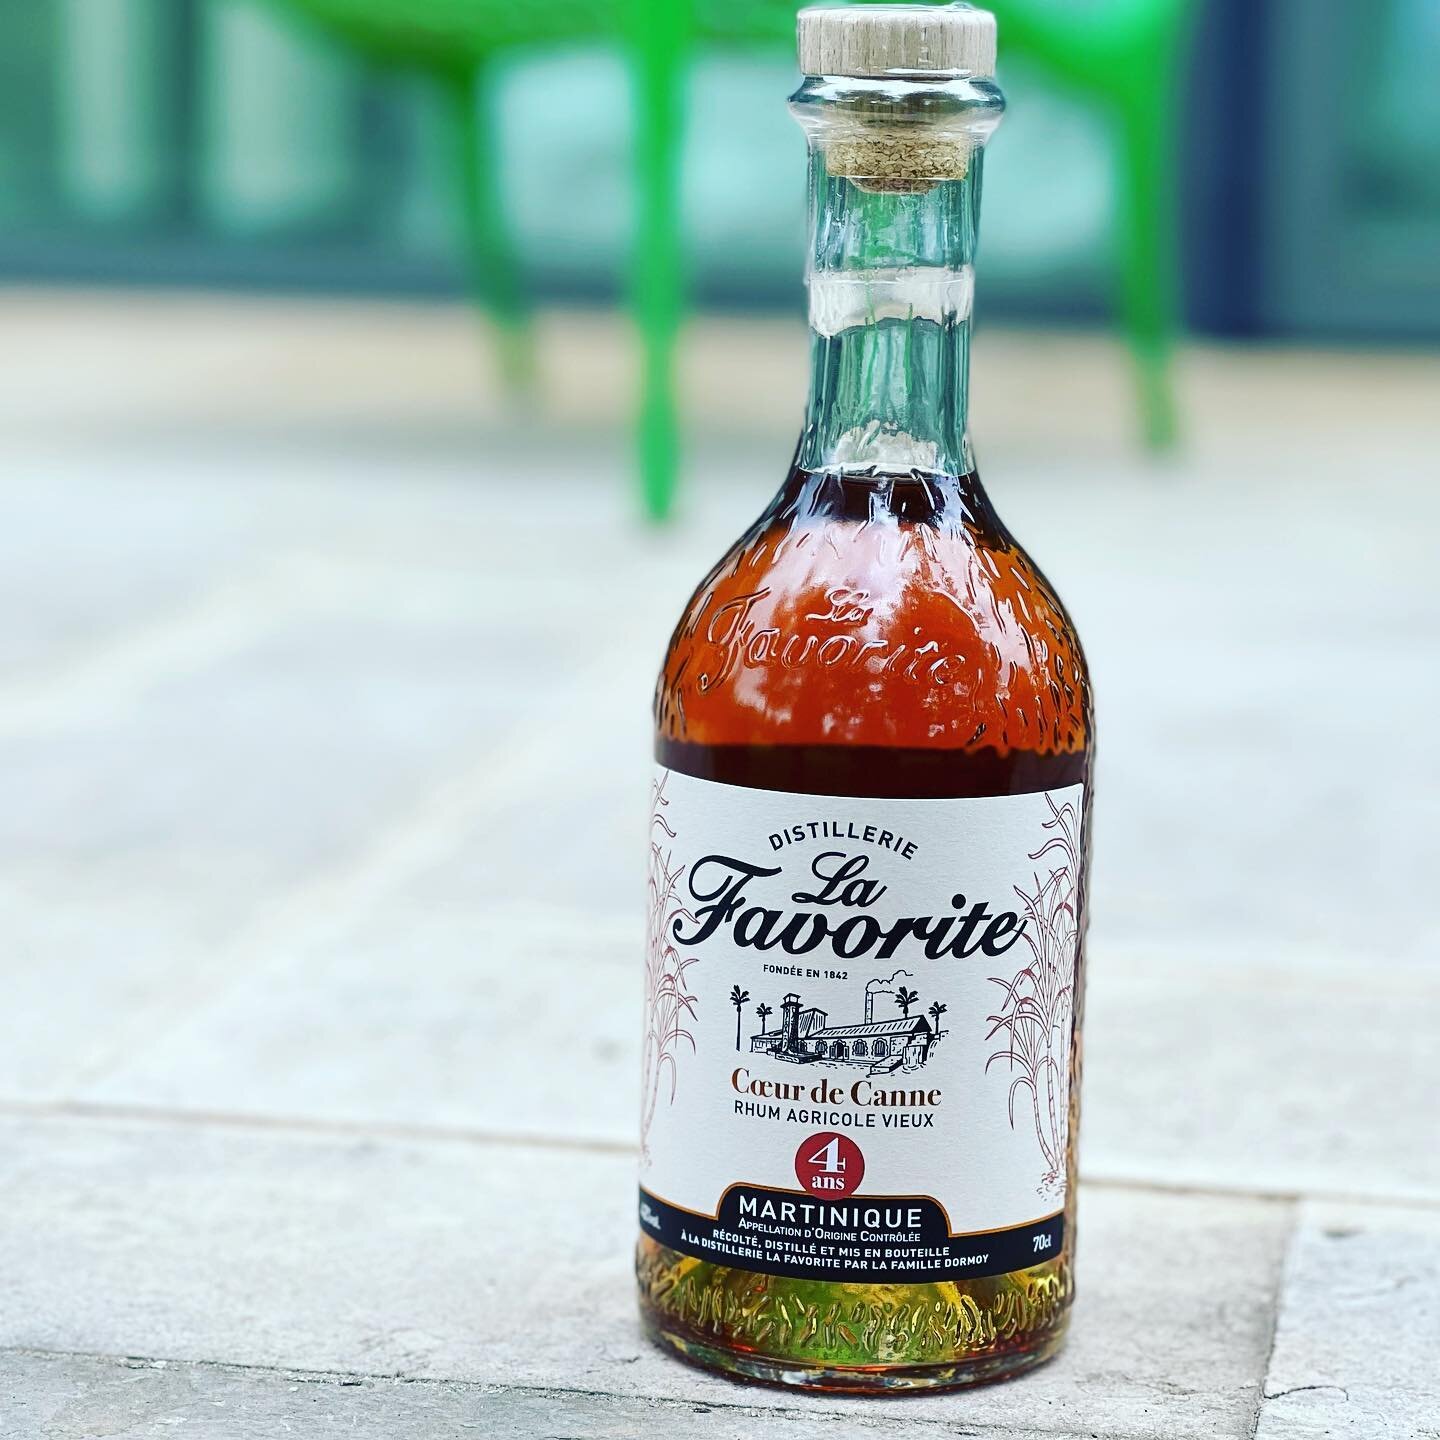 Traveling in France we found a nice bottle of La Favorite 4 years. An important and loved component of Faraday West Indies Rum. #faradaywestindiesrum #martinique #rhumagricole #lyon #rumhistory #rumsociety #lafavorite #lafavoriterhum